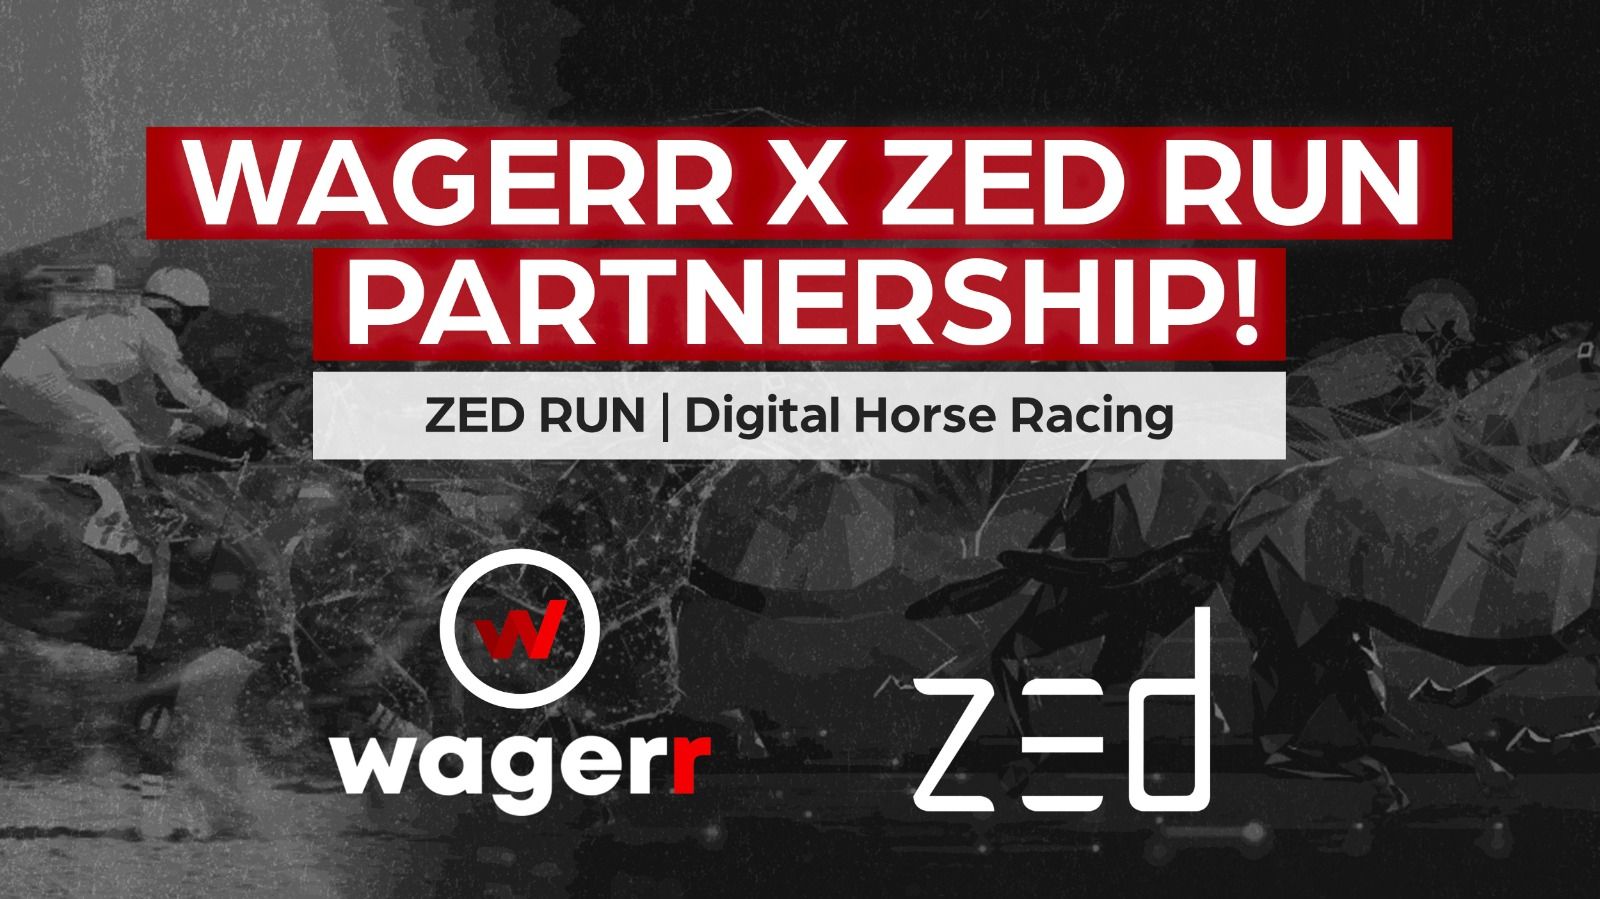 Wagerr x Zed Run Partnership